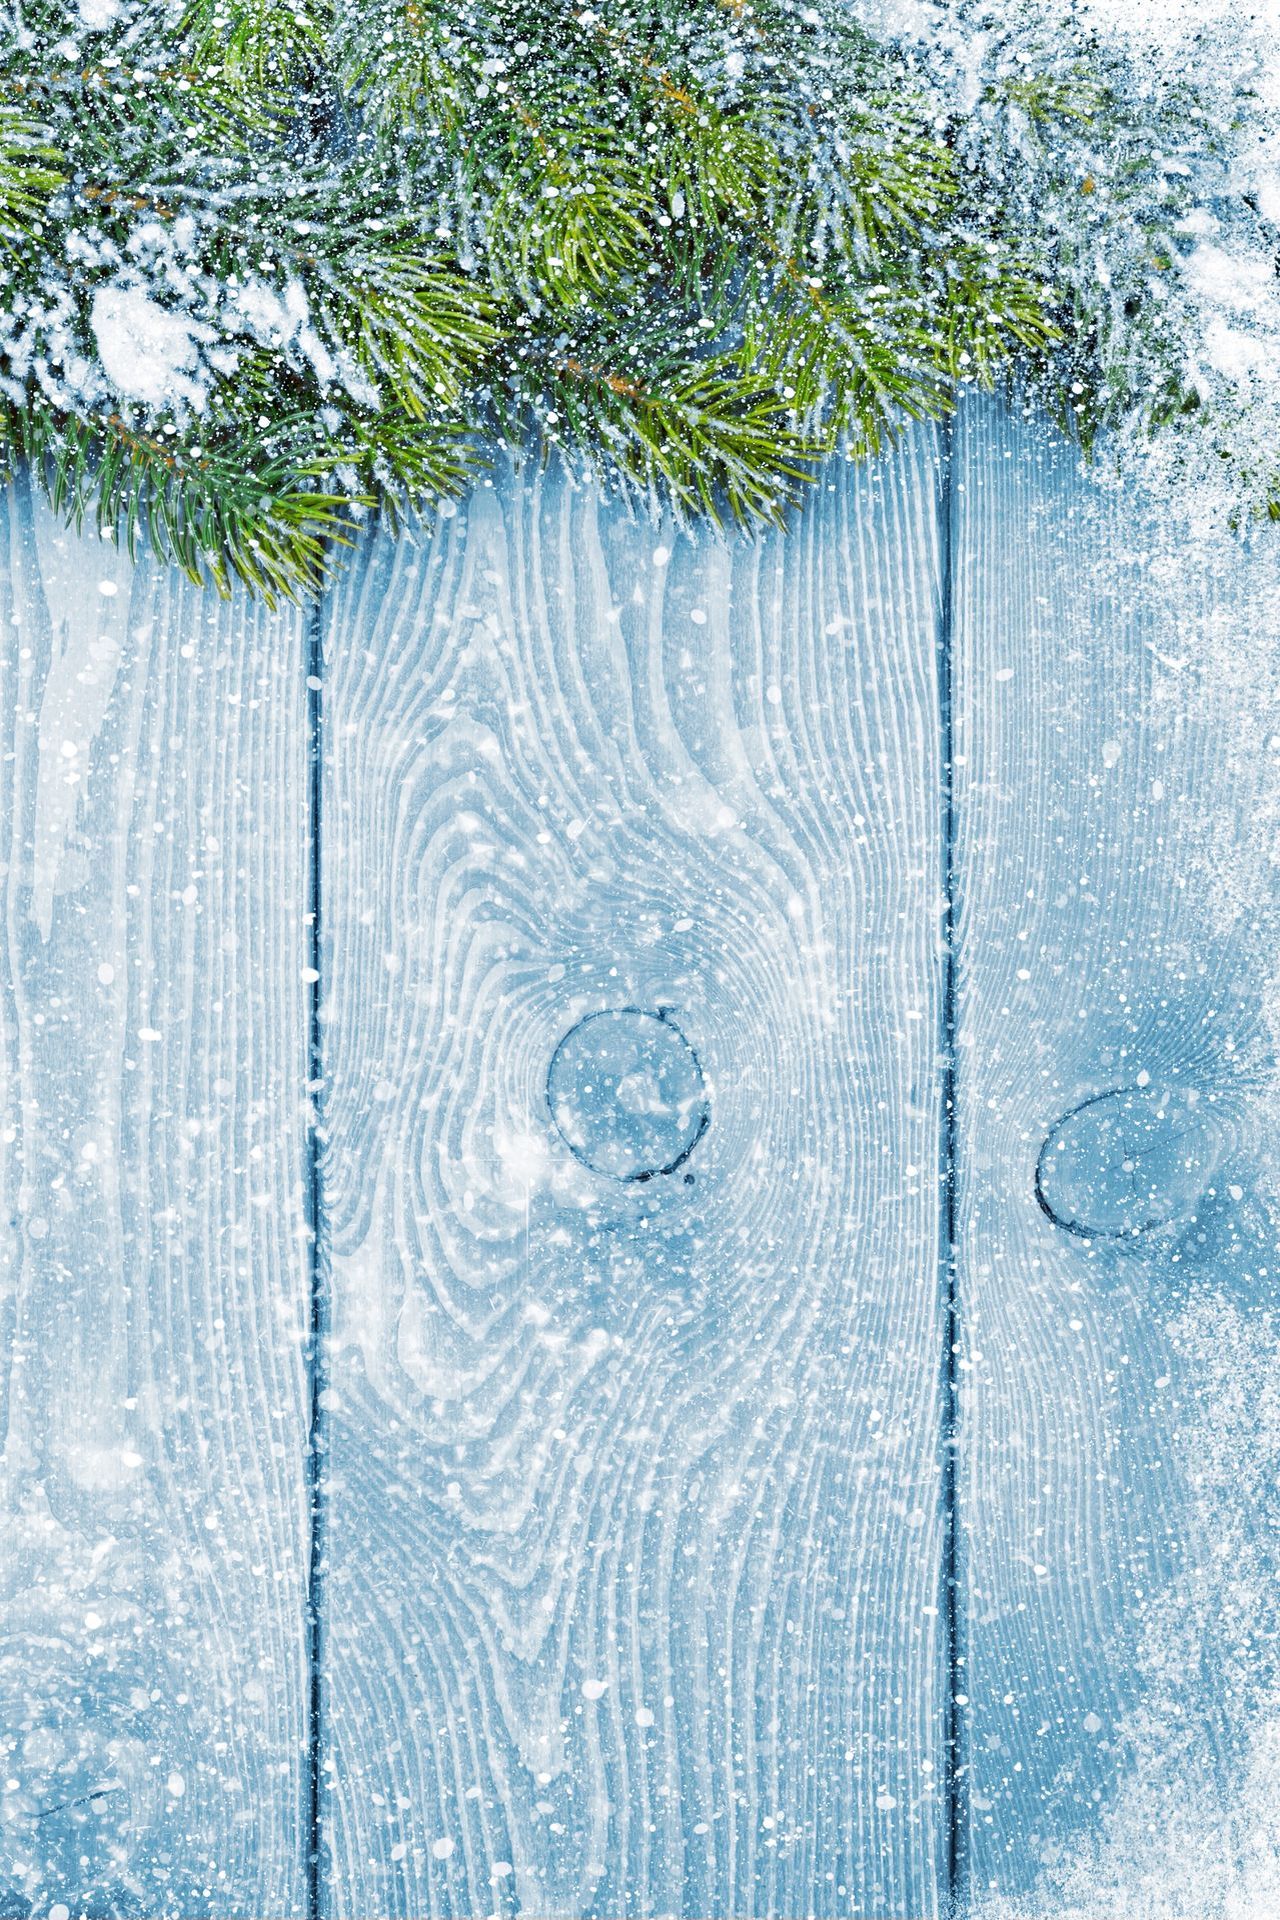 Winter Snow Merry Christmas Blue Wood - Phone Wallpaper Blue Wood - HD Wallpaper 